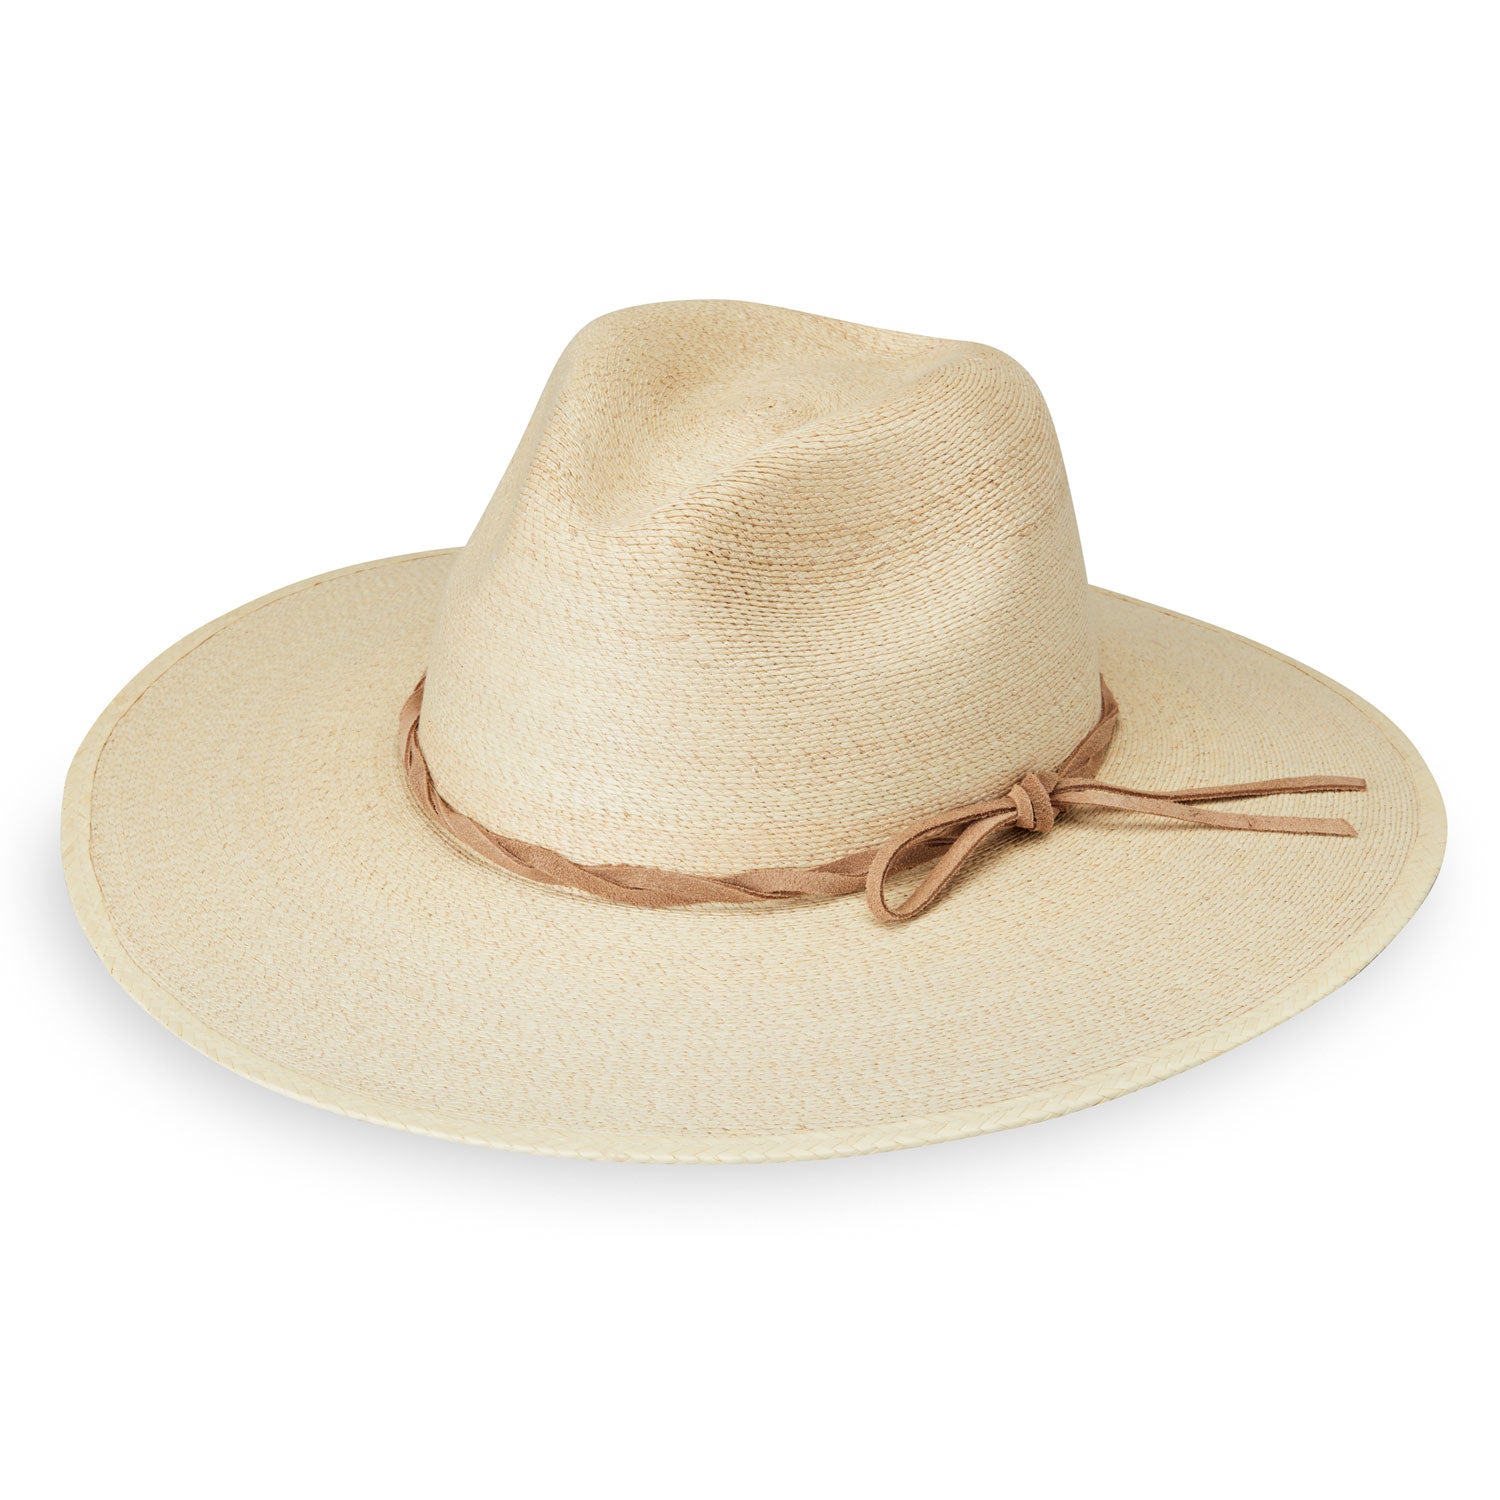 Featuring Ladies' Big Wide Brim Fedora Style Tulum Straw Sun Hat made of Natural Fiber from Wallaroo